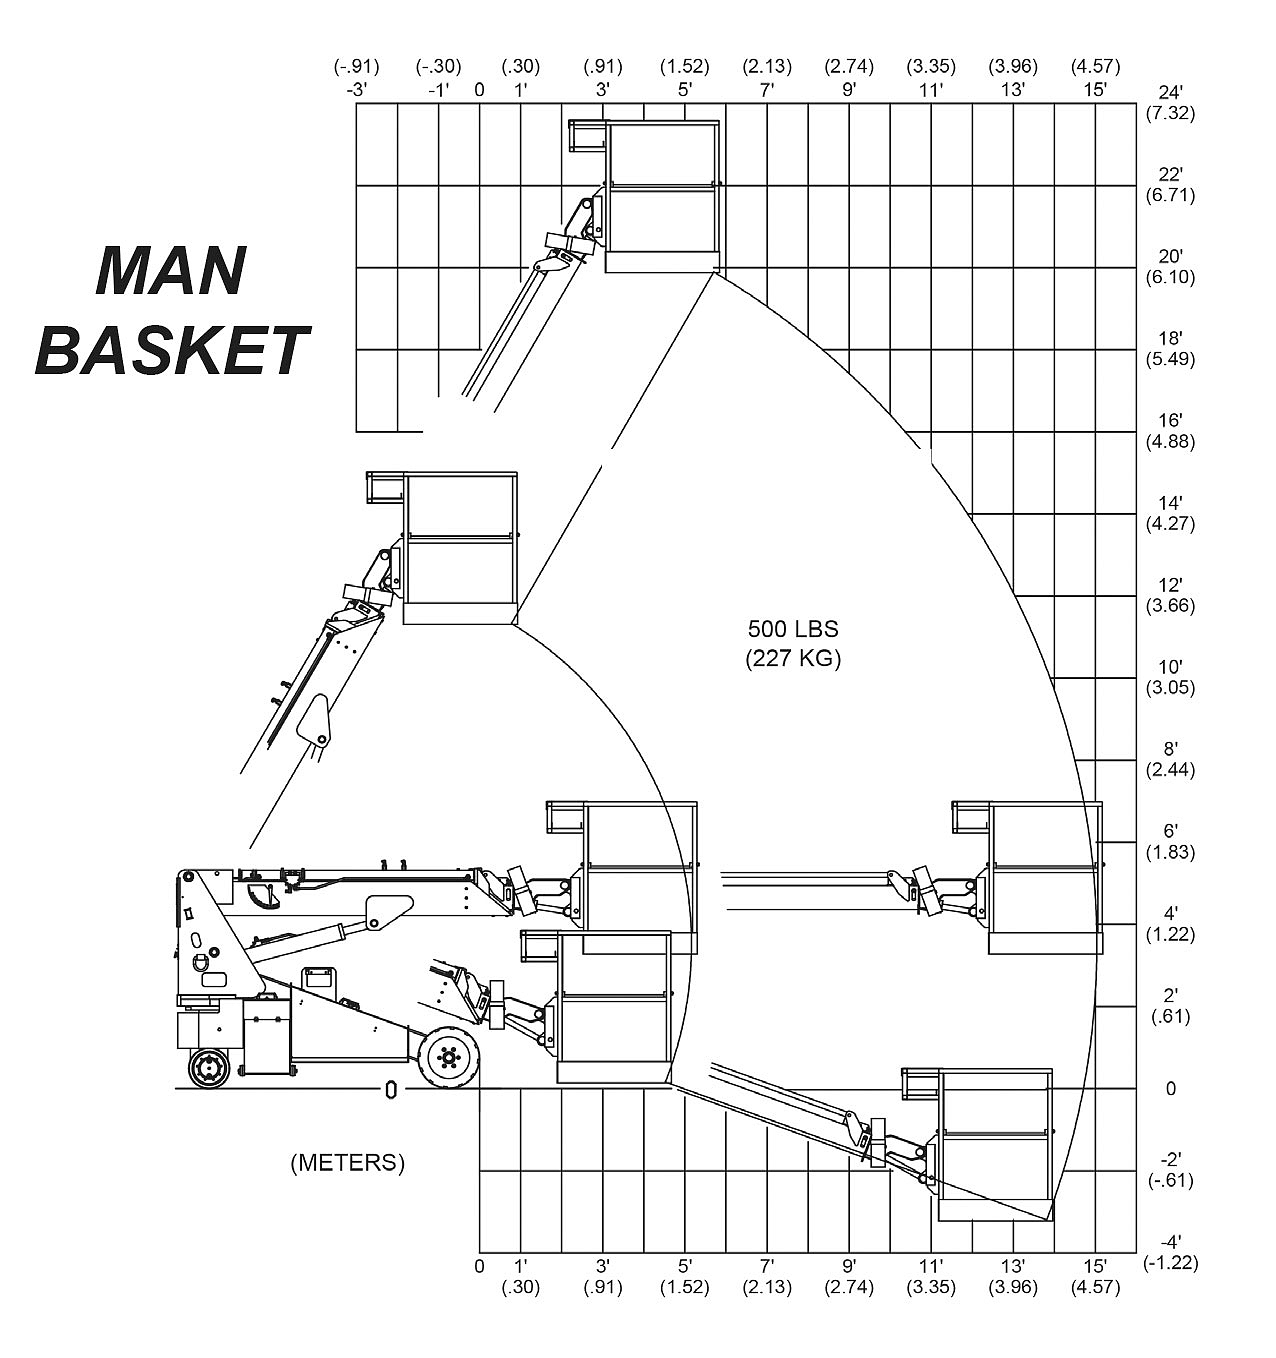 The Brandon 6 Man Basket Load Capacity